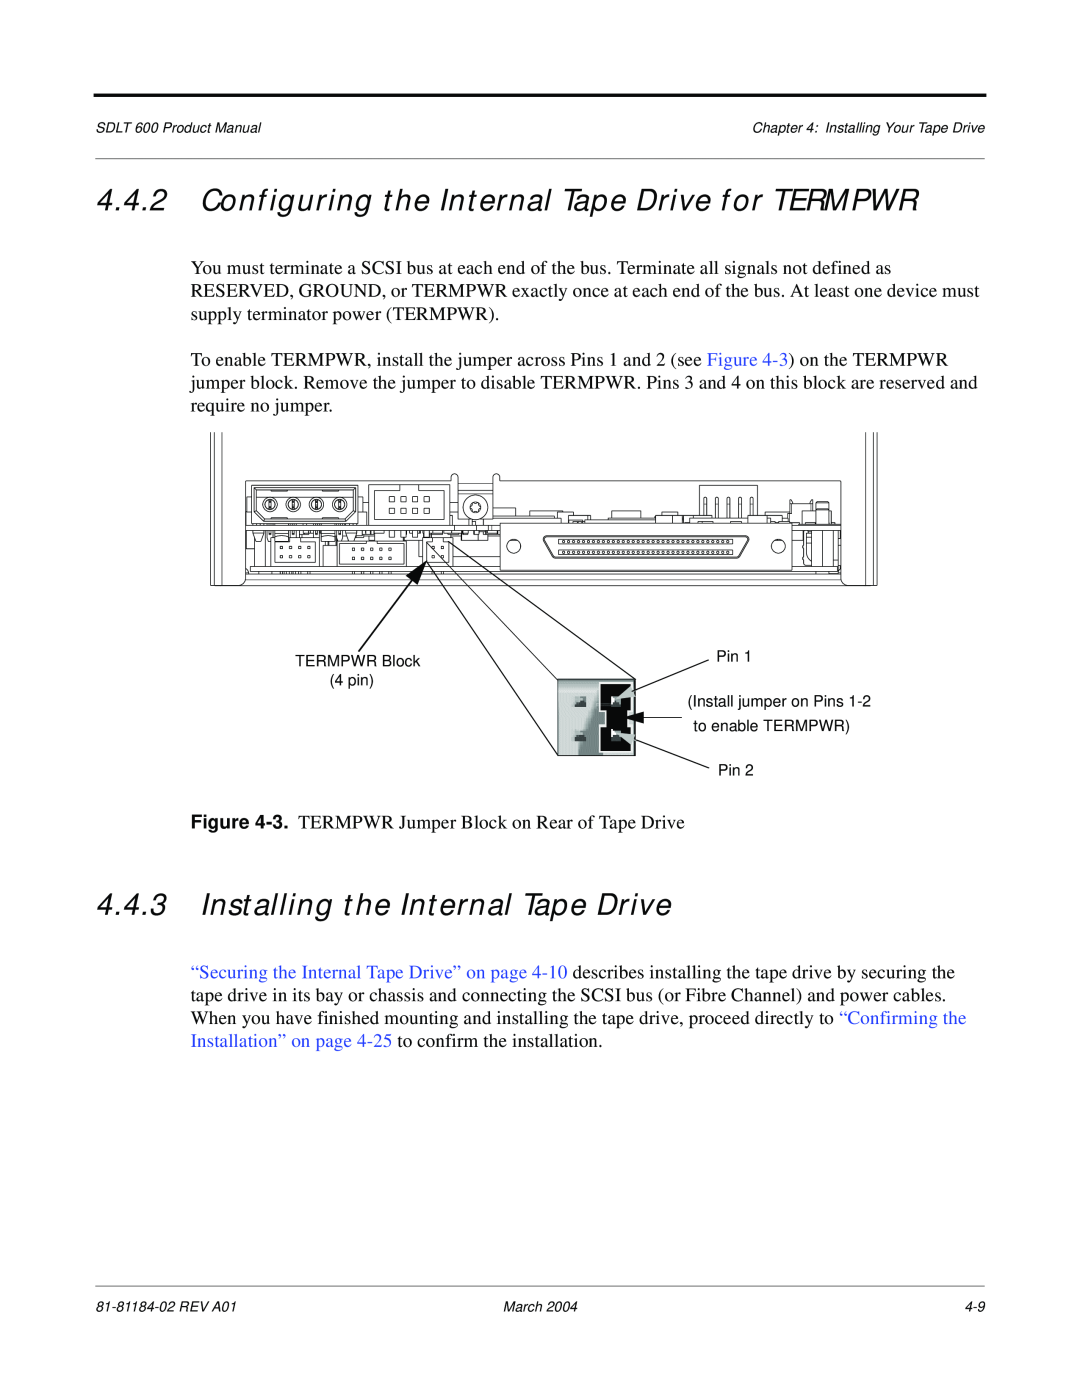 Tandberg Data 600 manual Configuring the Internal Tape Drive for TERMPWR, Installing the Internal Tape Drive 